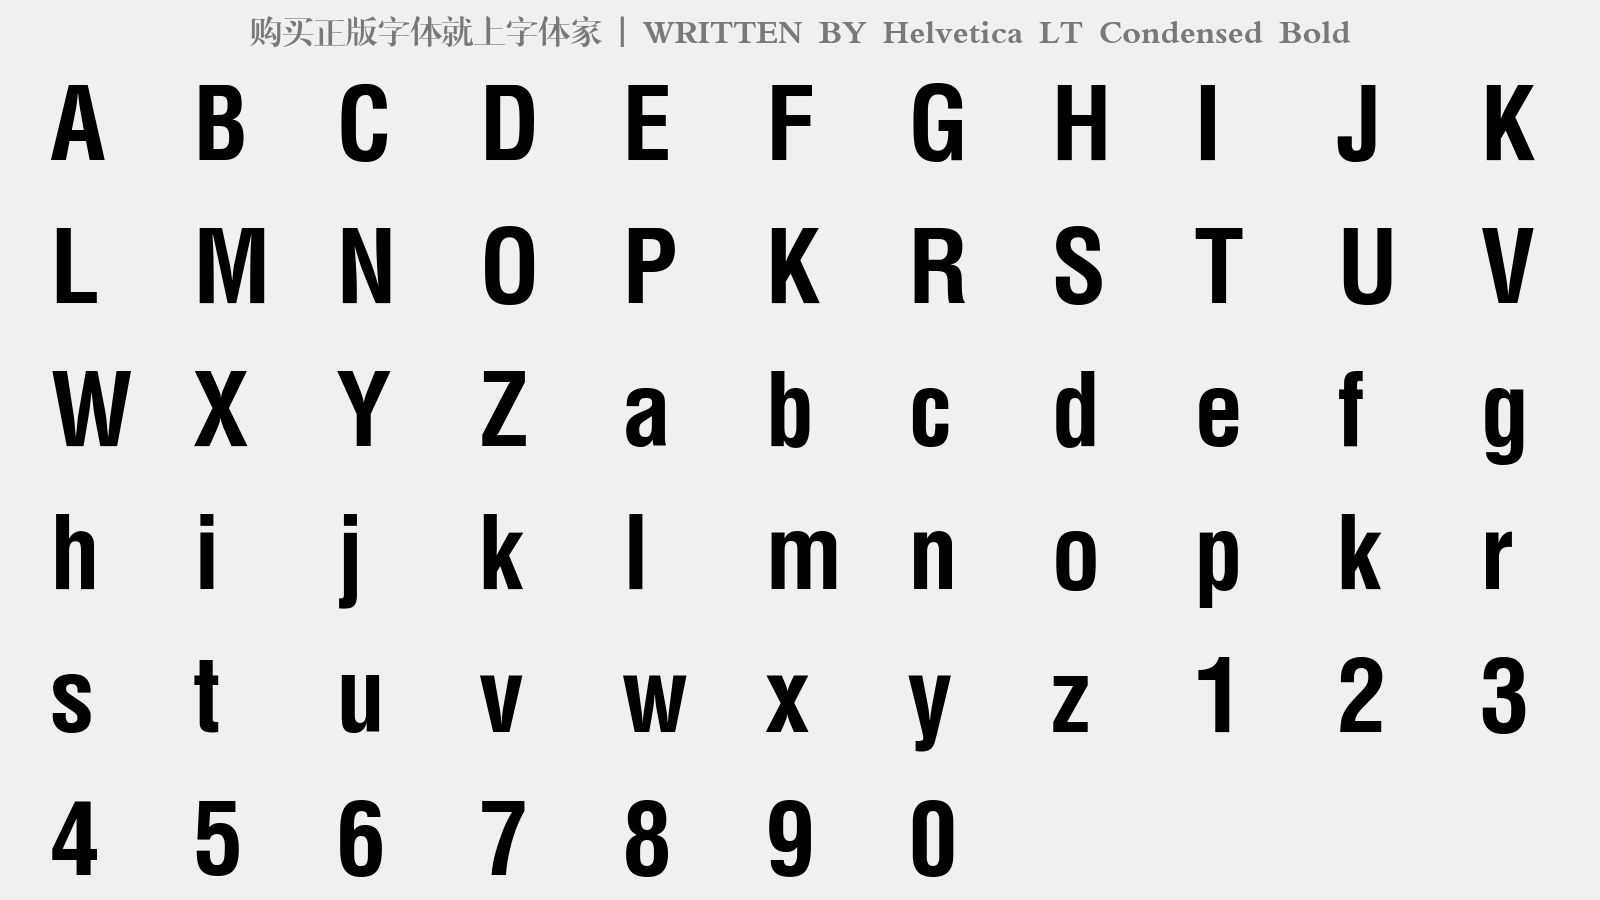 Helvetica LT Condensed Bold - 大写字母/小写字母/数字